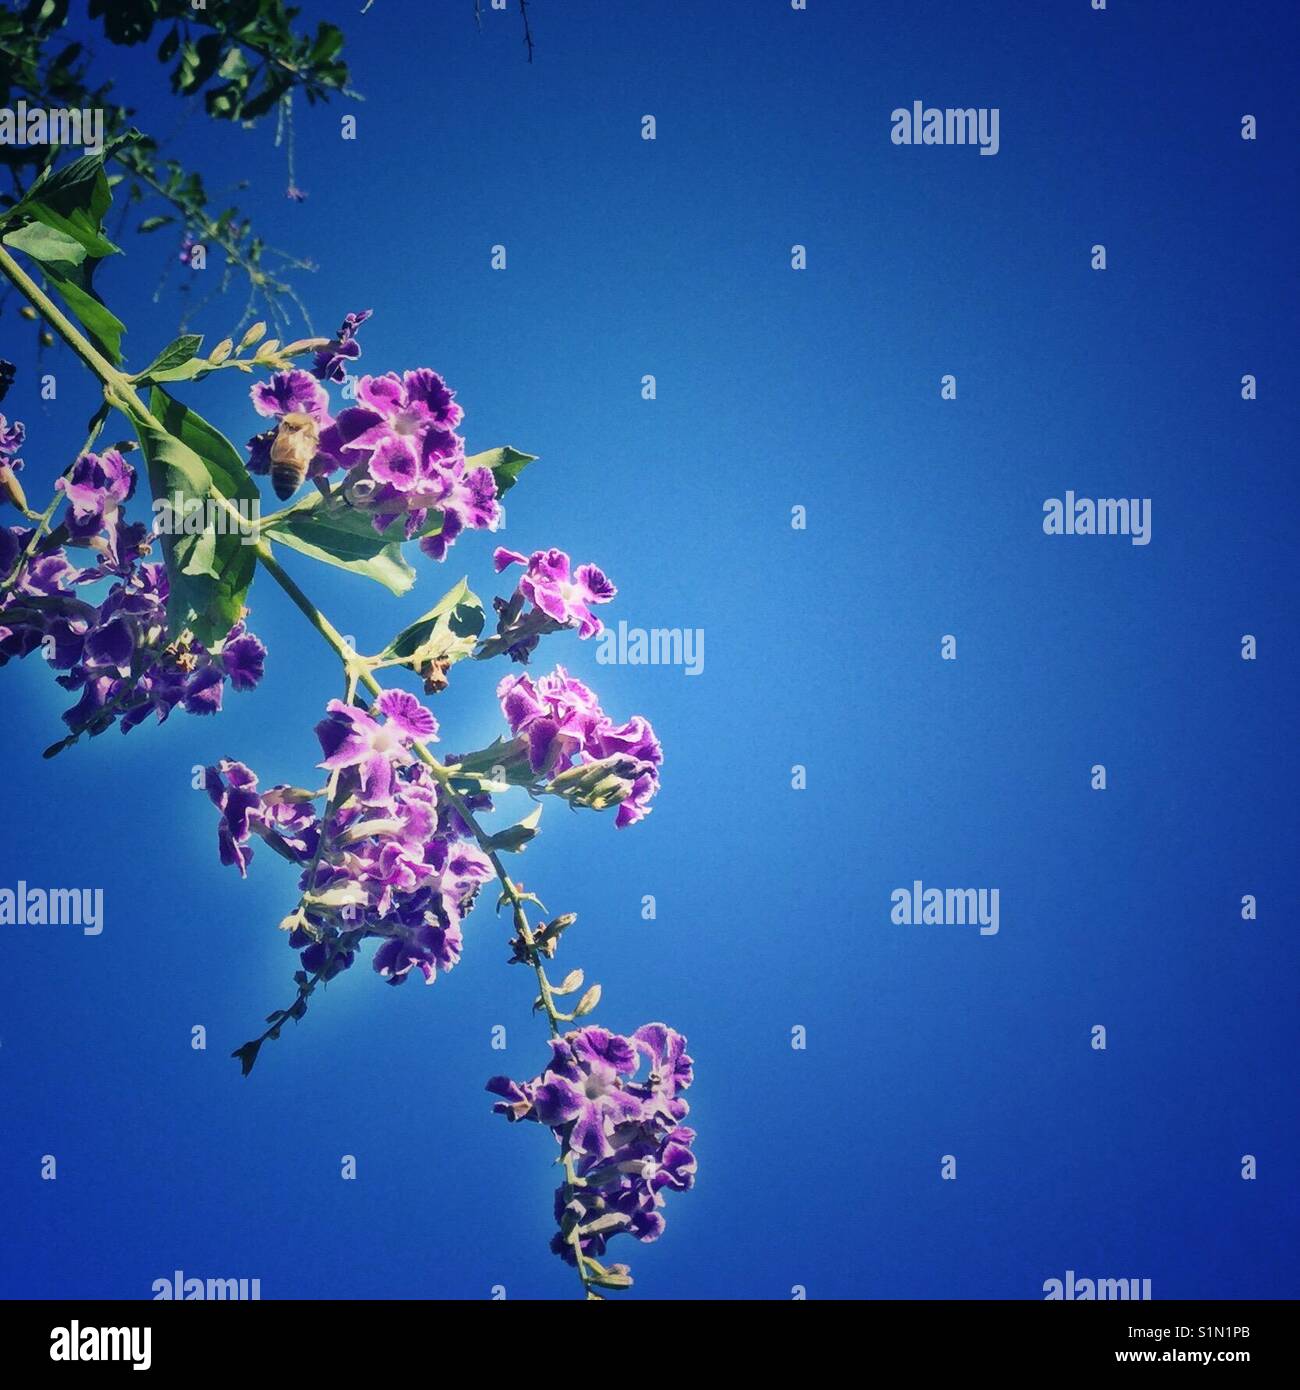 Clear Blue Skies, purple flower cluster, iPhone photo, spring season Stock Photo